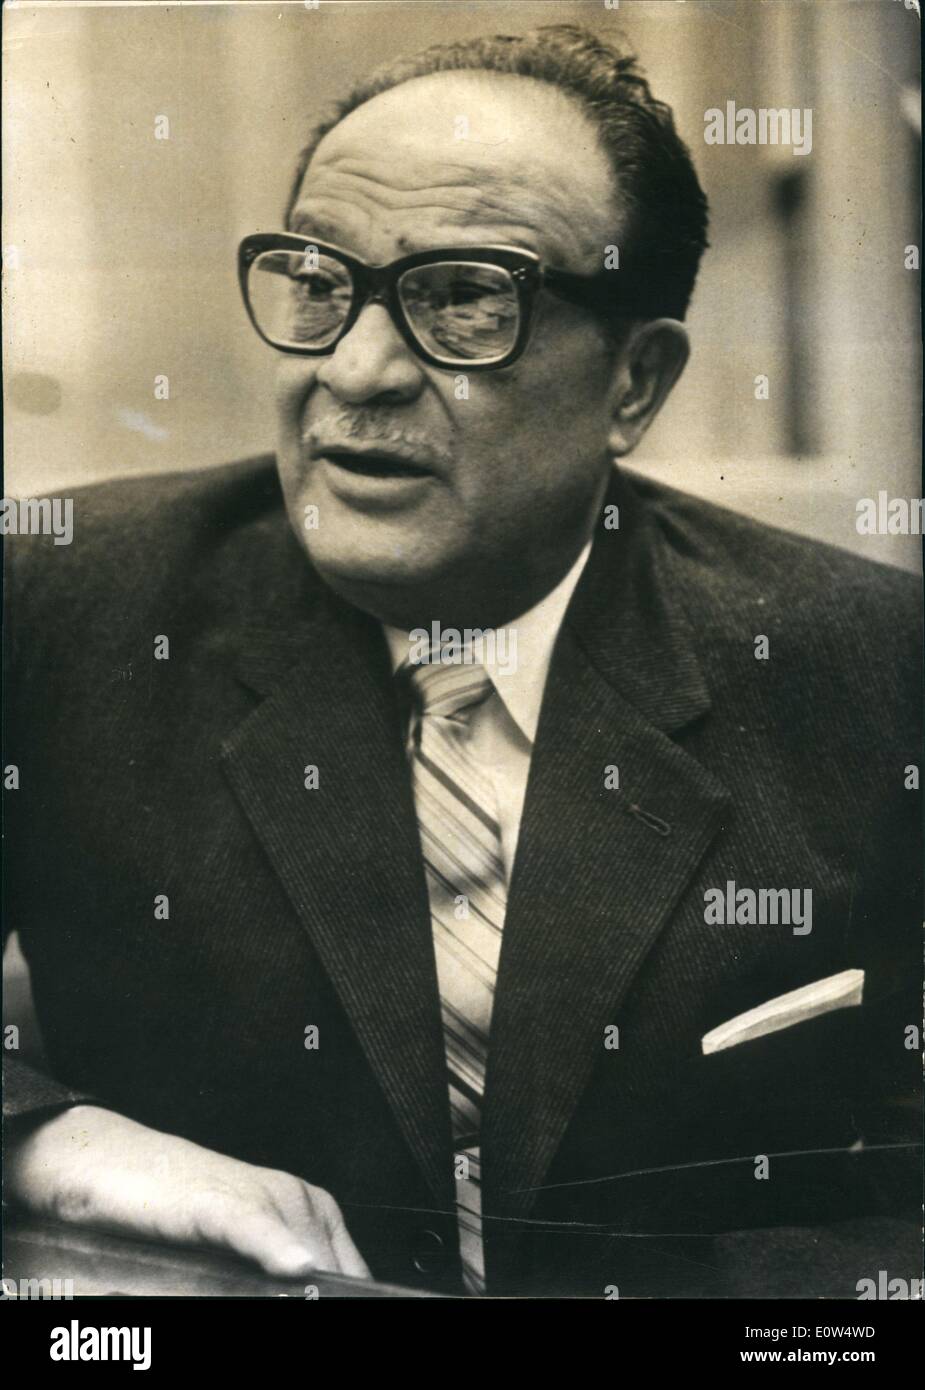 Apr. 30, 1961 - Mr Jose Miro Cardona of the Cuban government Stock Photo - apr-30-1961-mr-jose-miro-cardona-of-the-cuban-government-E0W4WD